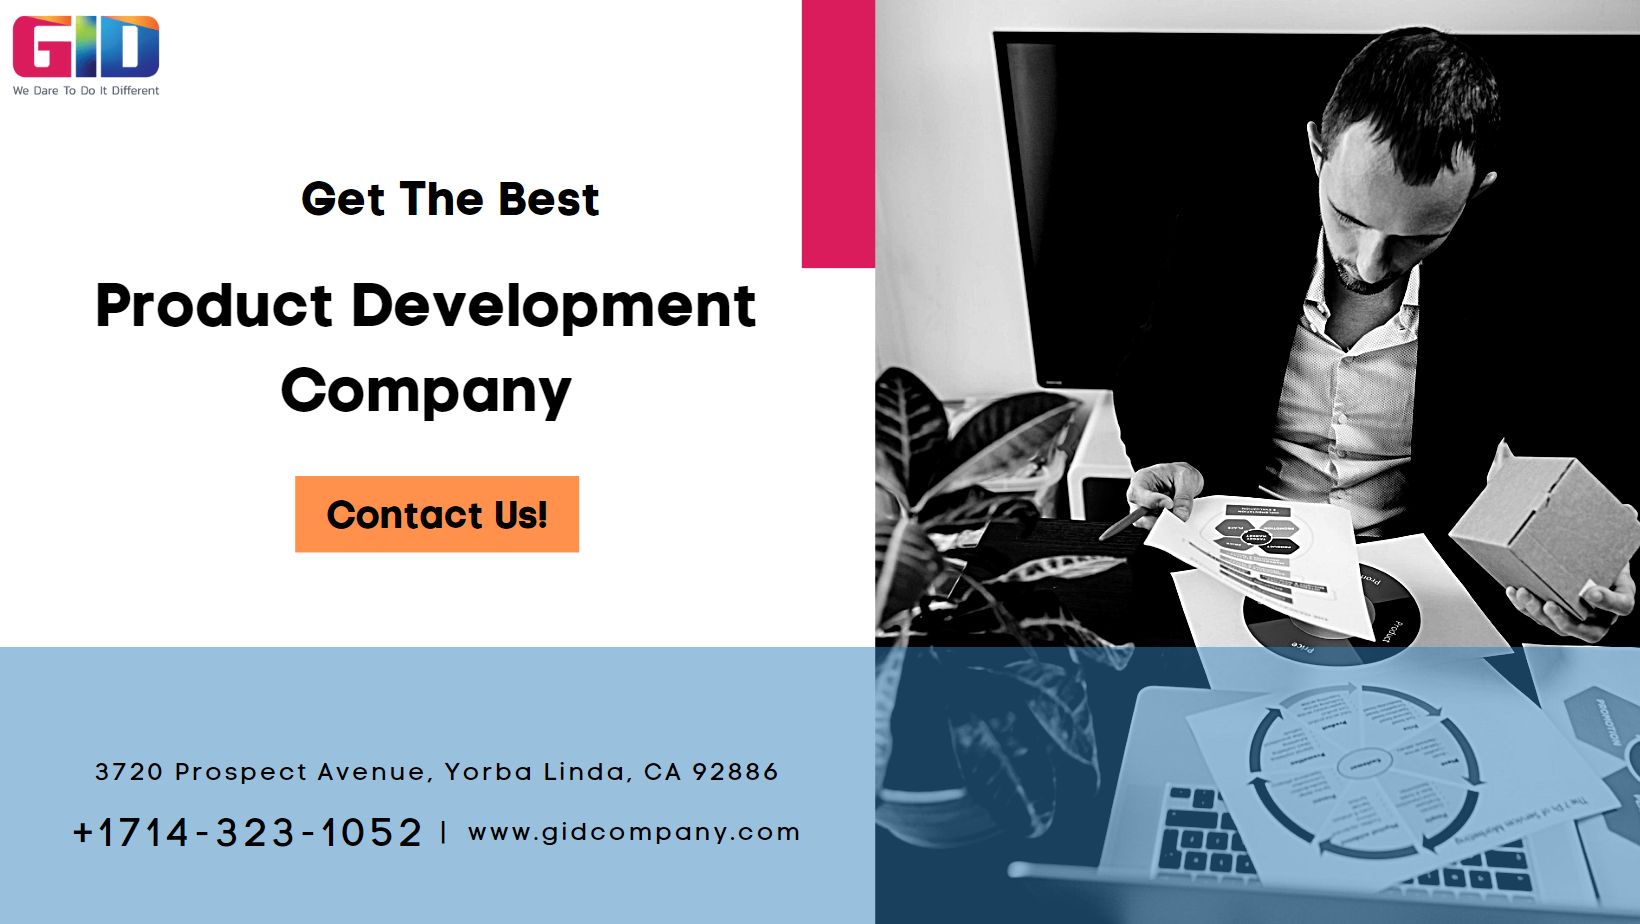 Product Development Company California - GID Company